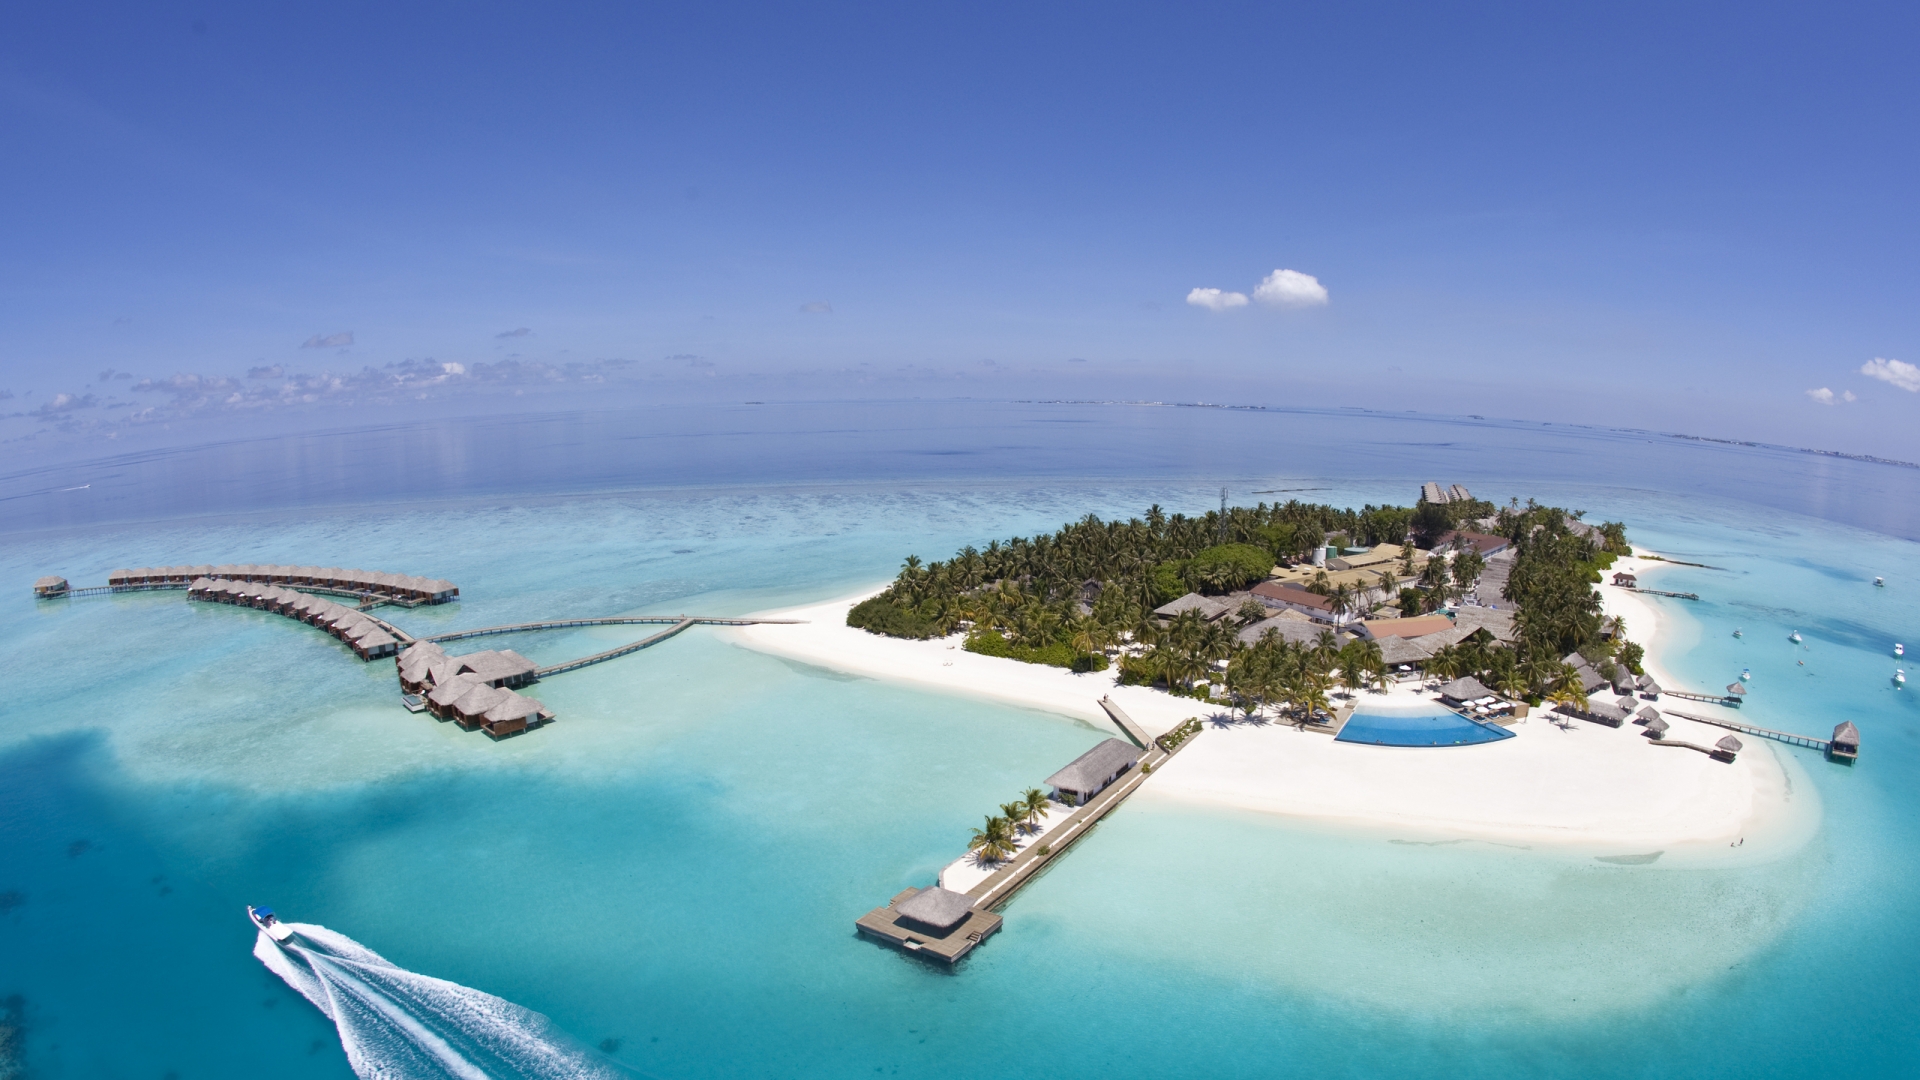 Maldives Island for 1920 x 1080 HDTV 1080p resolution